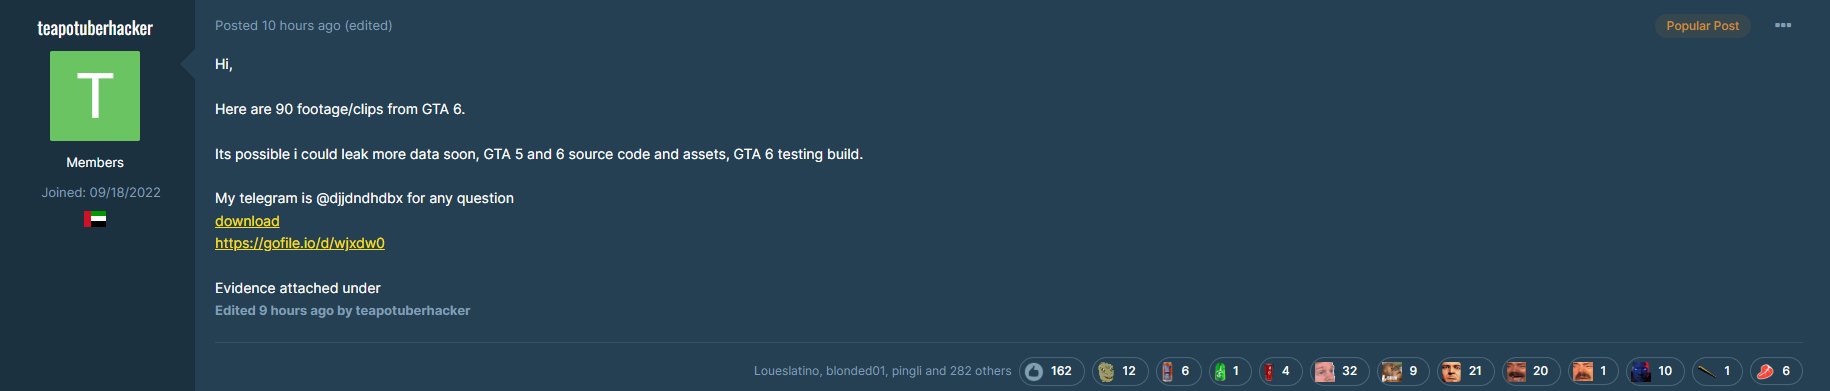 GTA 6 leak Hack all new info details